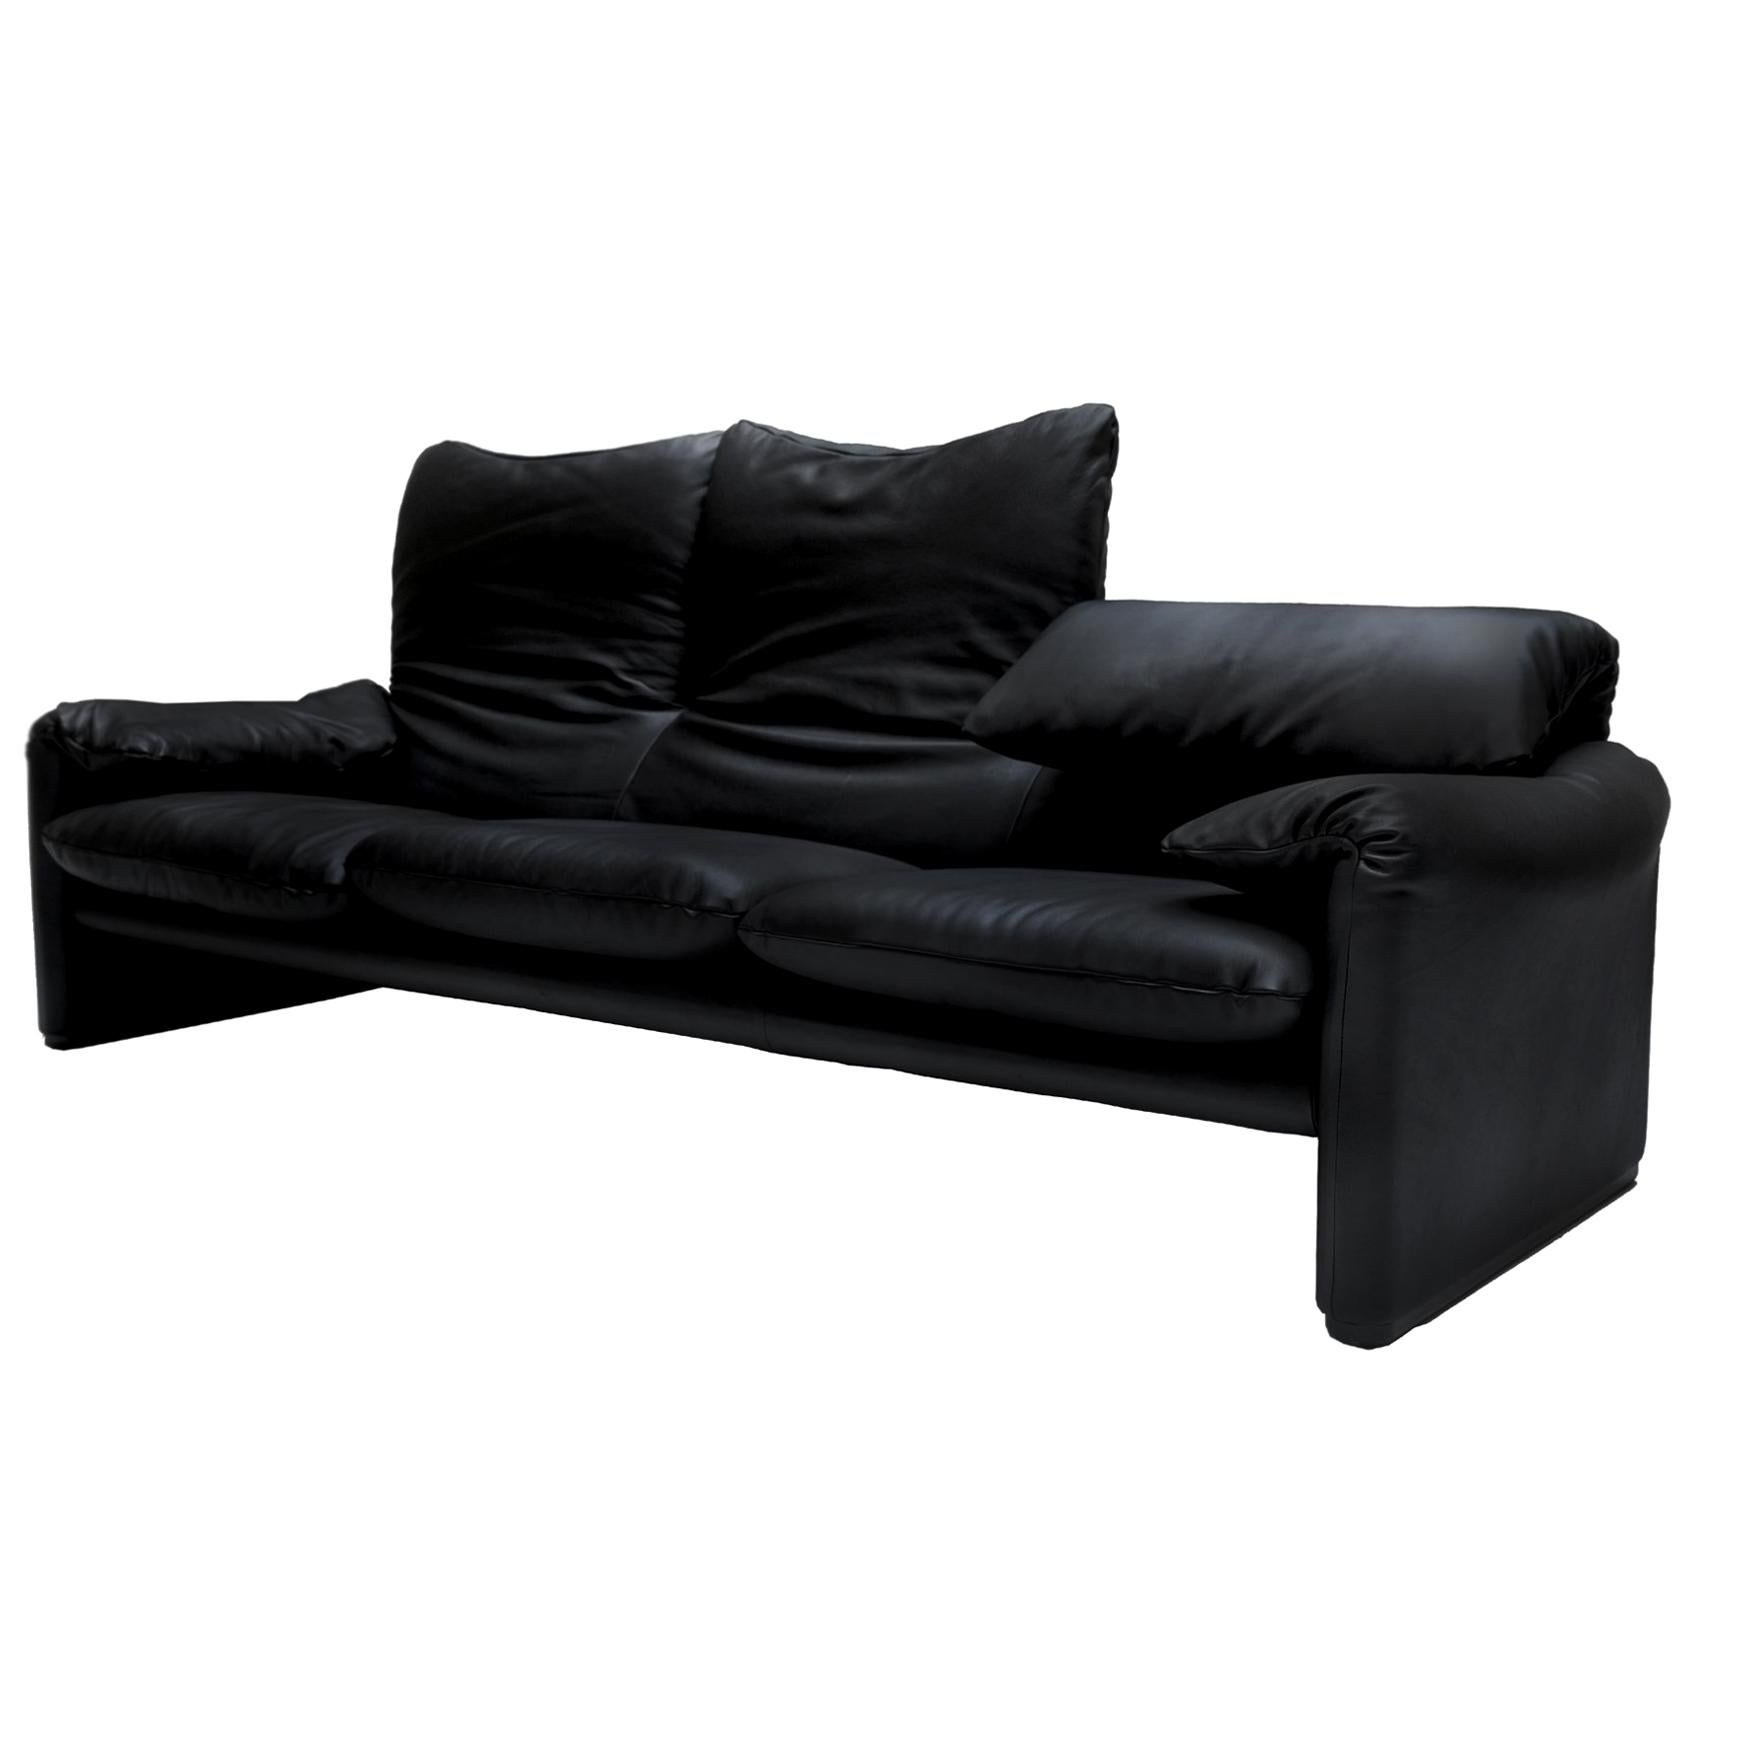 Three-Seat Black Leather Sofa "Maralunga" by Vico Magistretti for Cassina For Sale